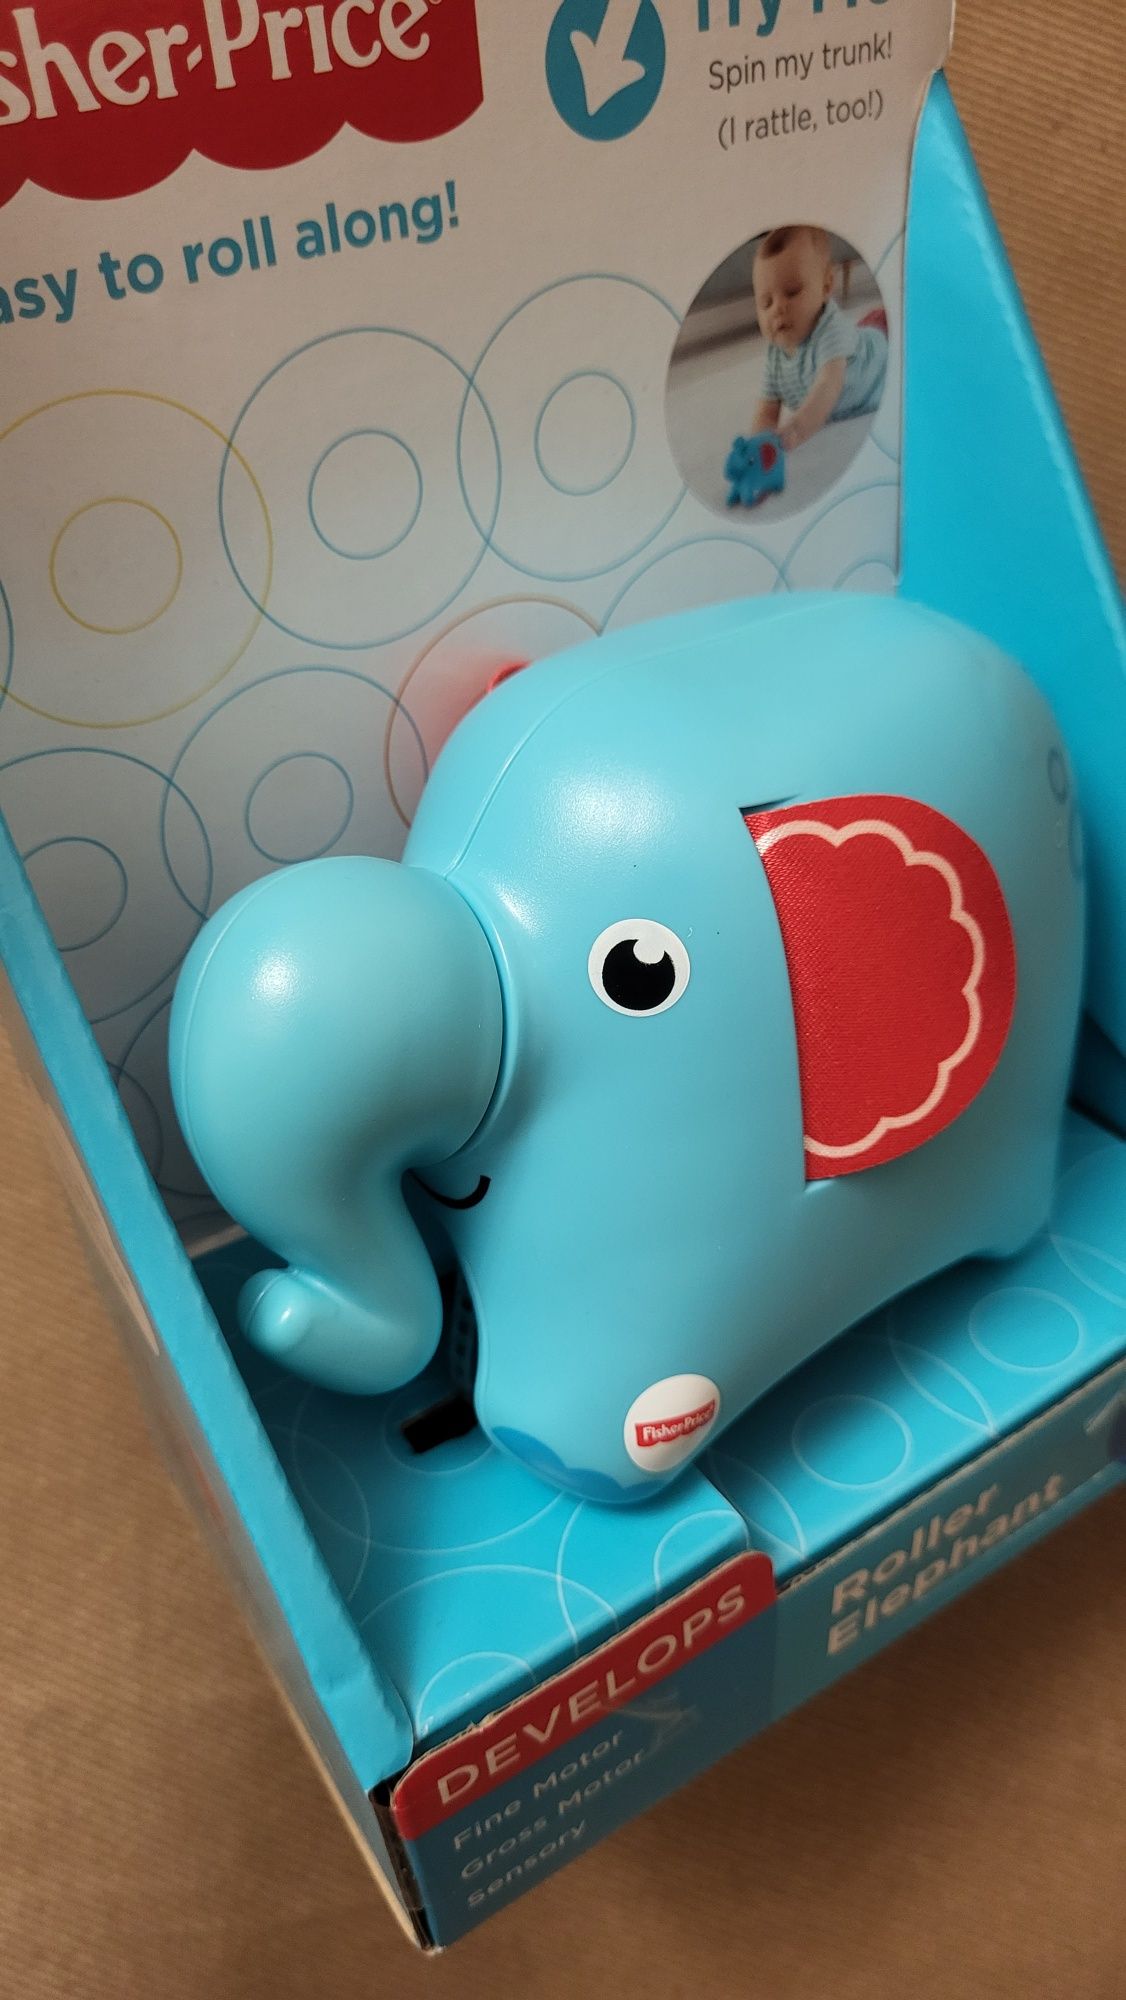 Дитяча іграшка каталка ролер слон від фішер прайс fisher price roller